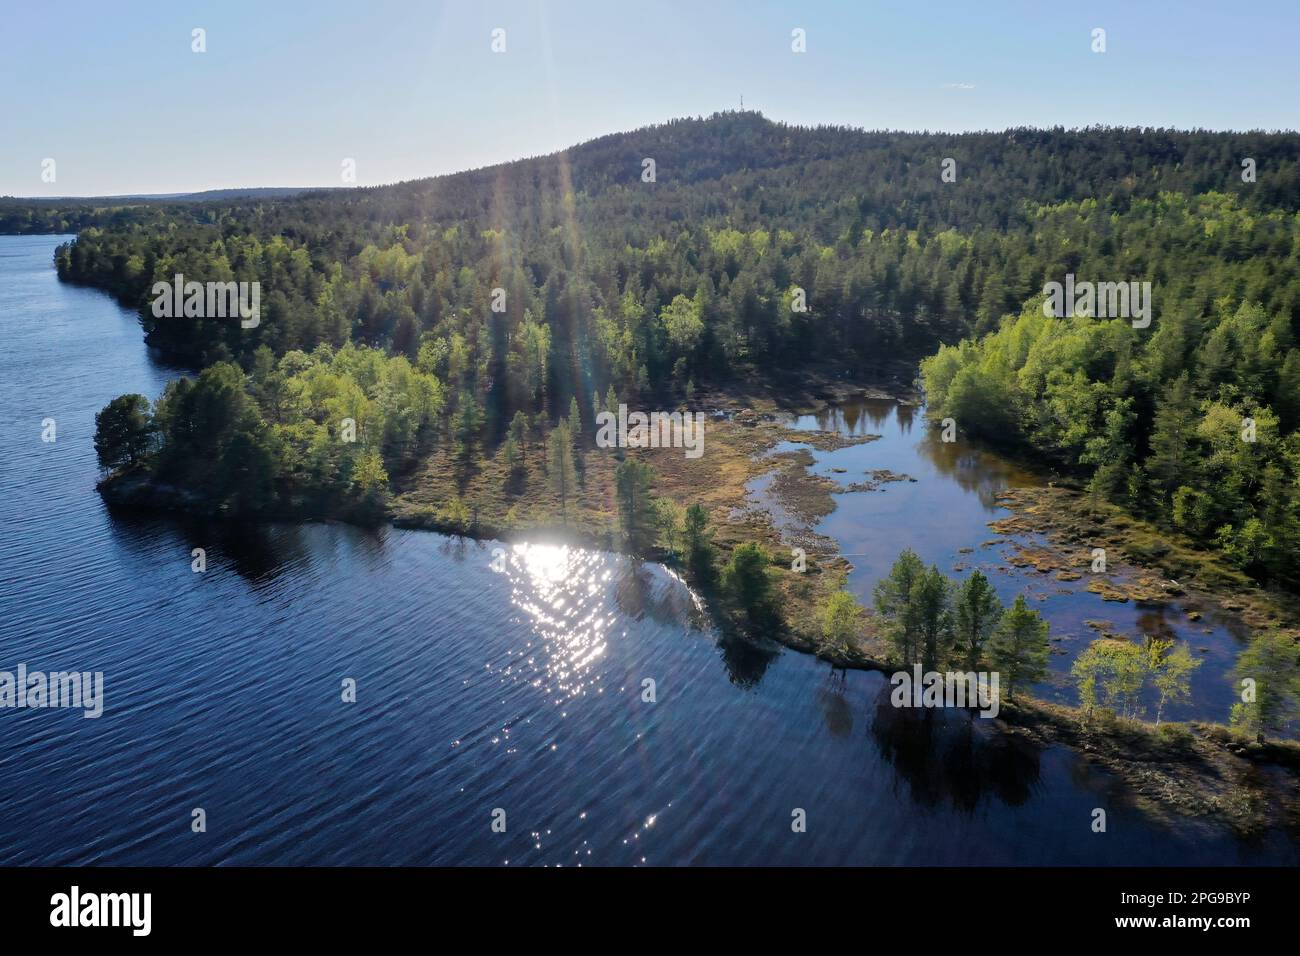 Fluss in Finnland, Ounasjärvi bei Enontekiö, Lappland, mit Wald Foto Stock